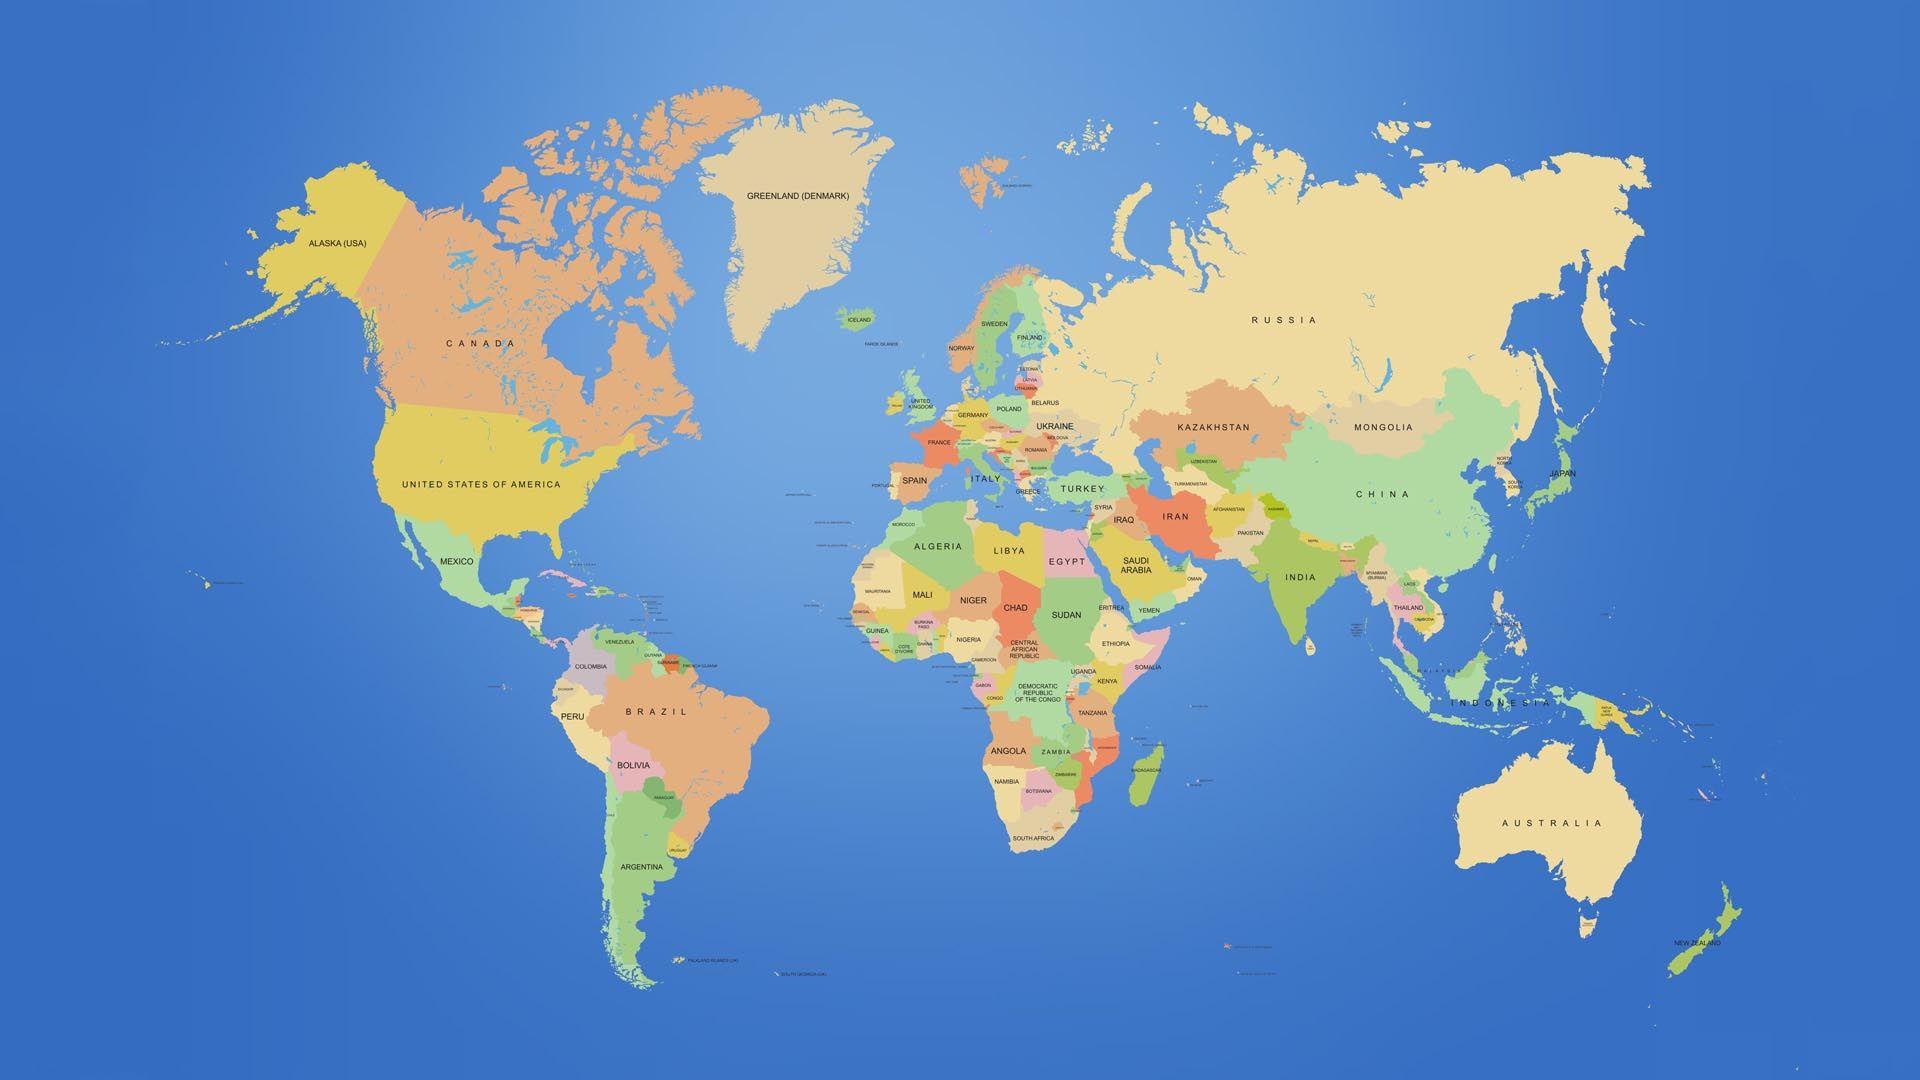 Download World Map Wallpaper 6258 1920x1080 px High Resolution